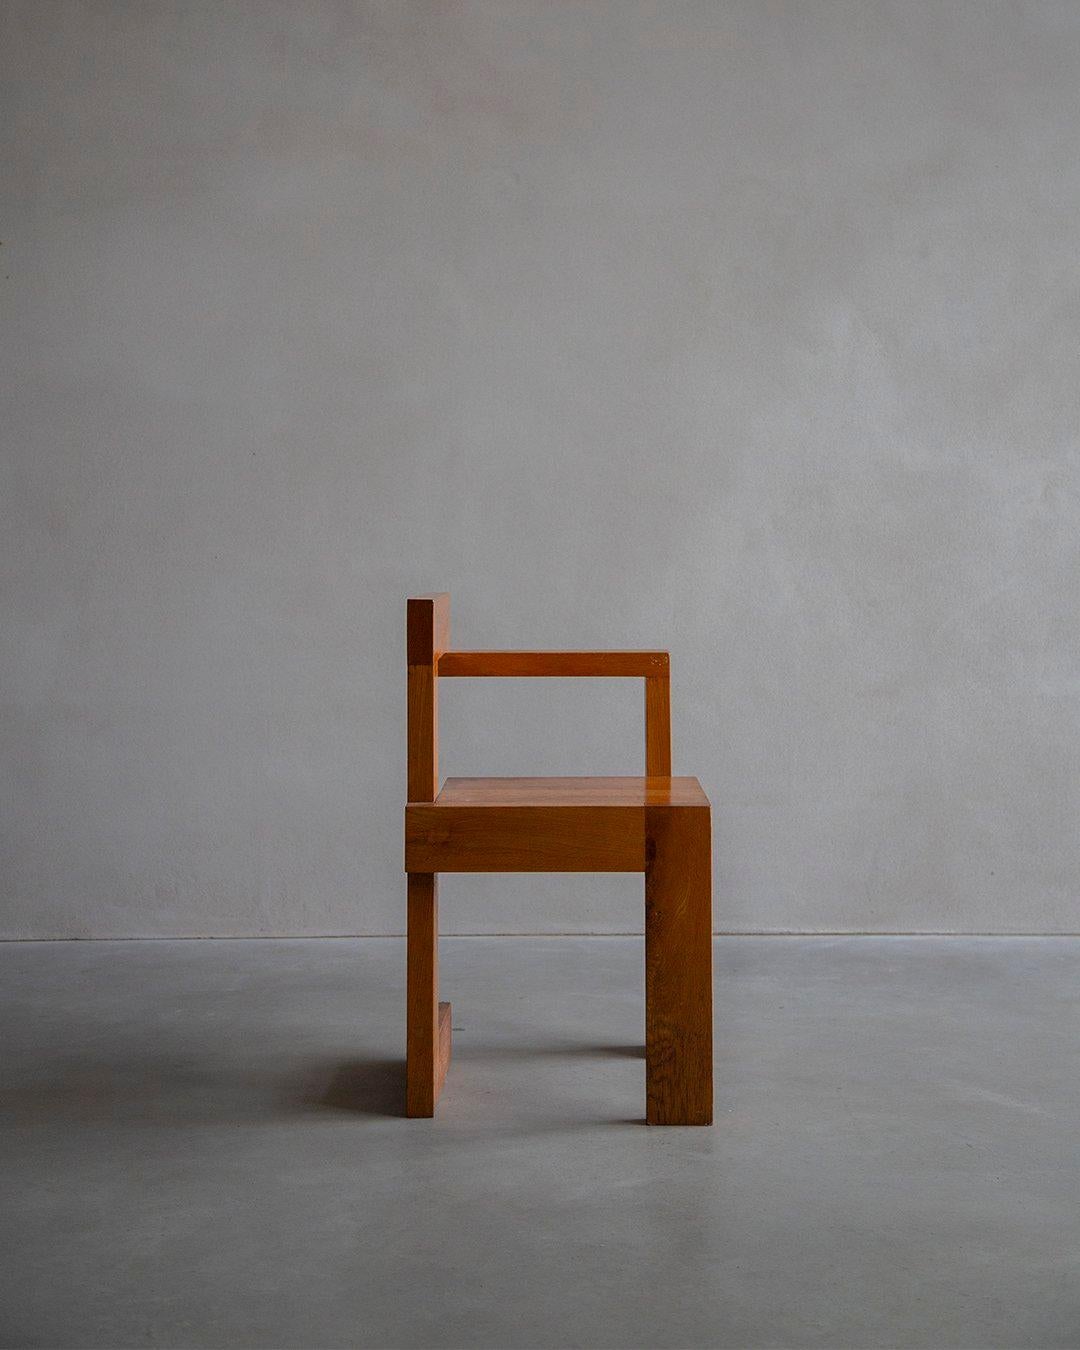 De Stijl Manner Of Gerrit Rietveld - Steltman Chair - 1970s Dutch interpretation For Sale